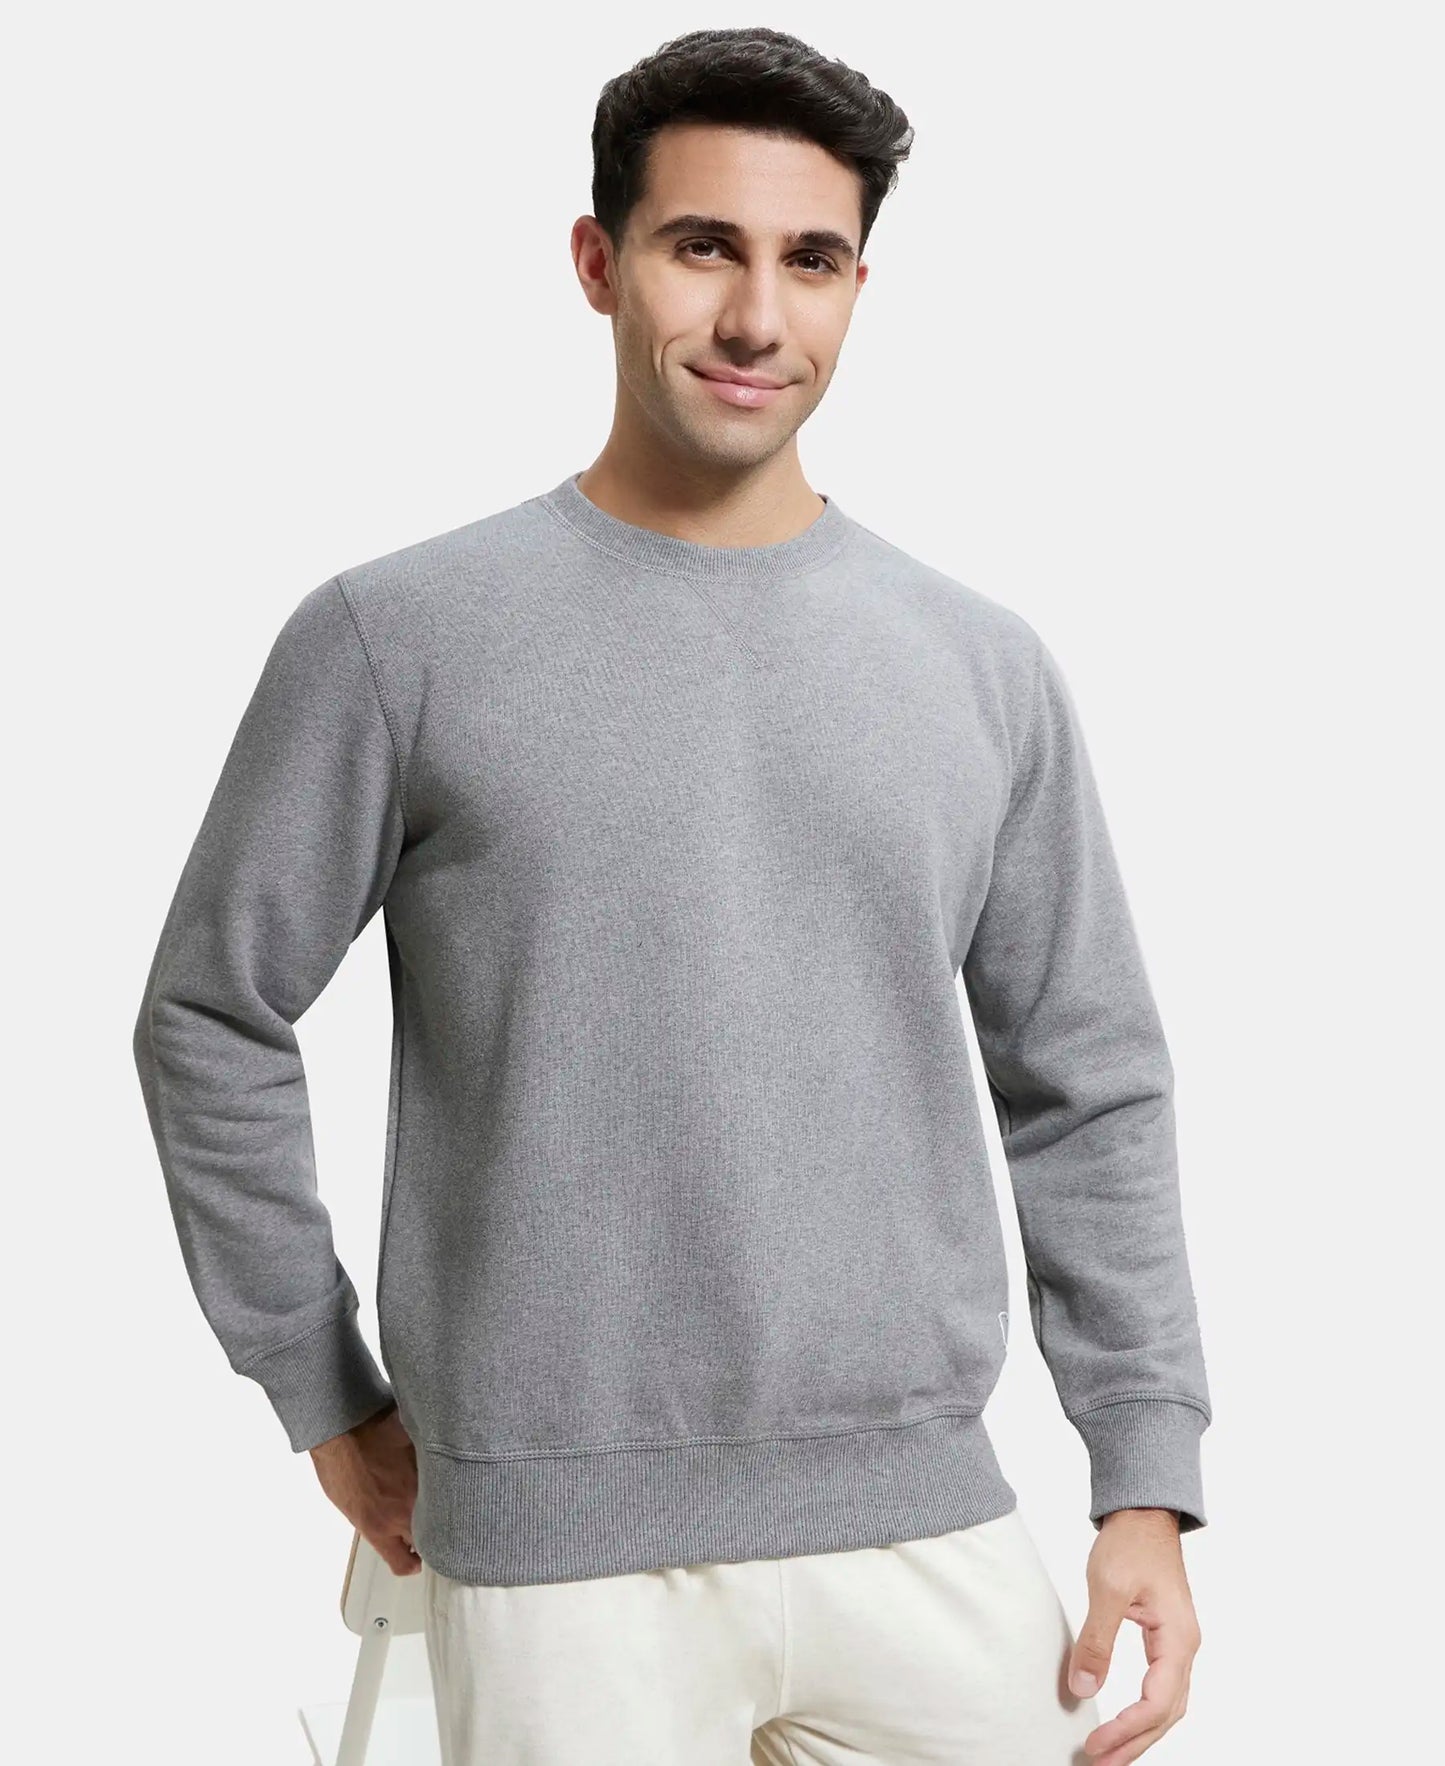 Super Combed Cotton Rich Fleece Sweatshirt with StayWarm Technology - Grey Melange-5